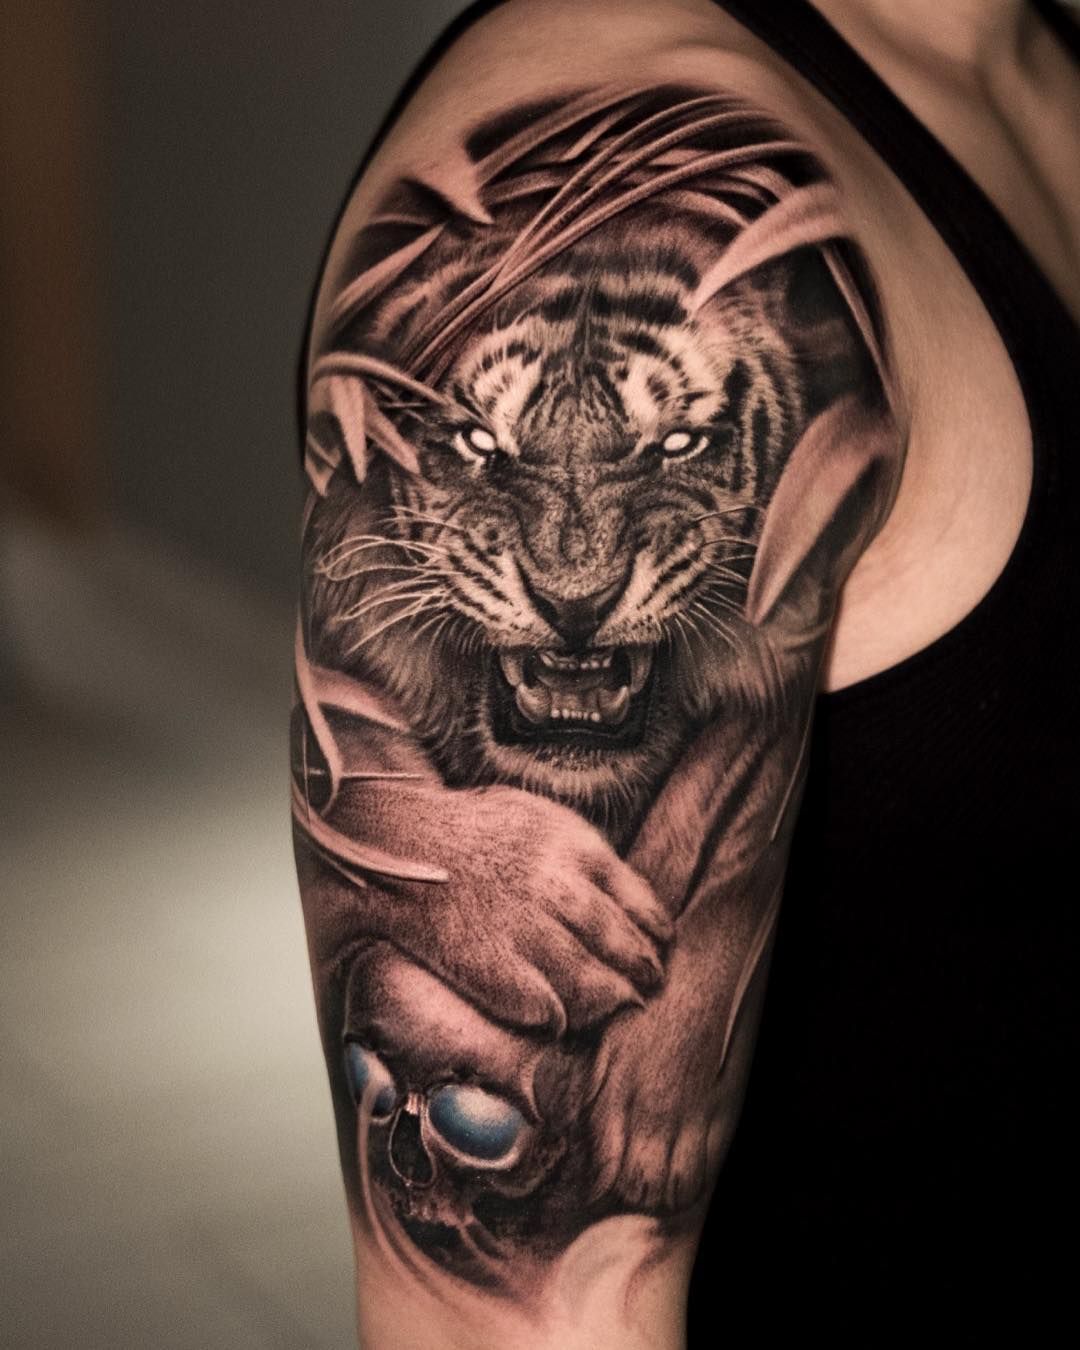 Microrealistic tiger tattoo on the forearm